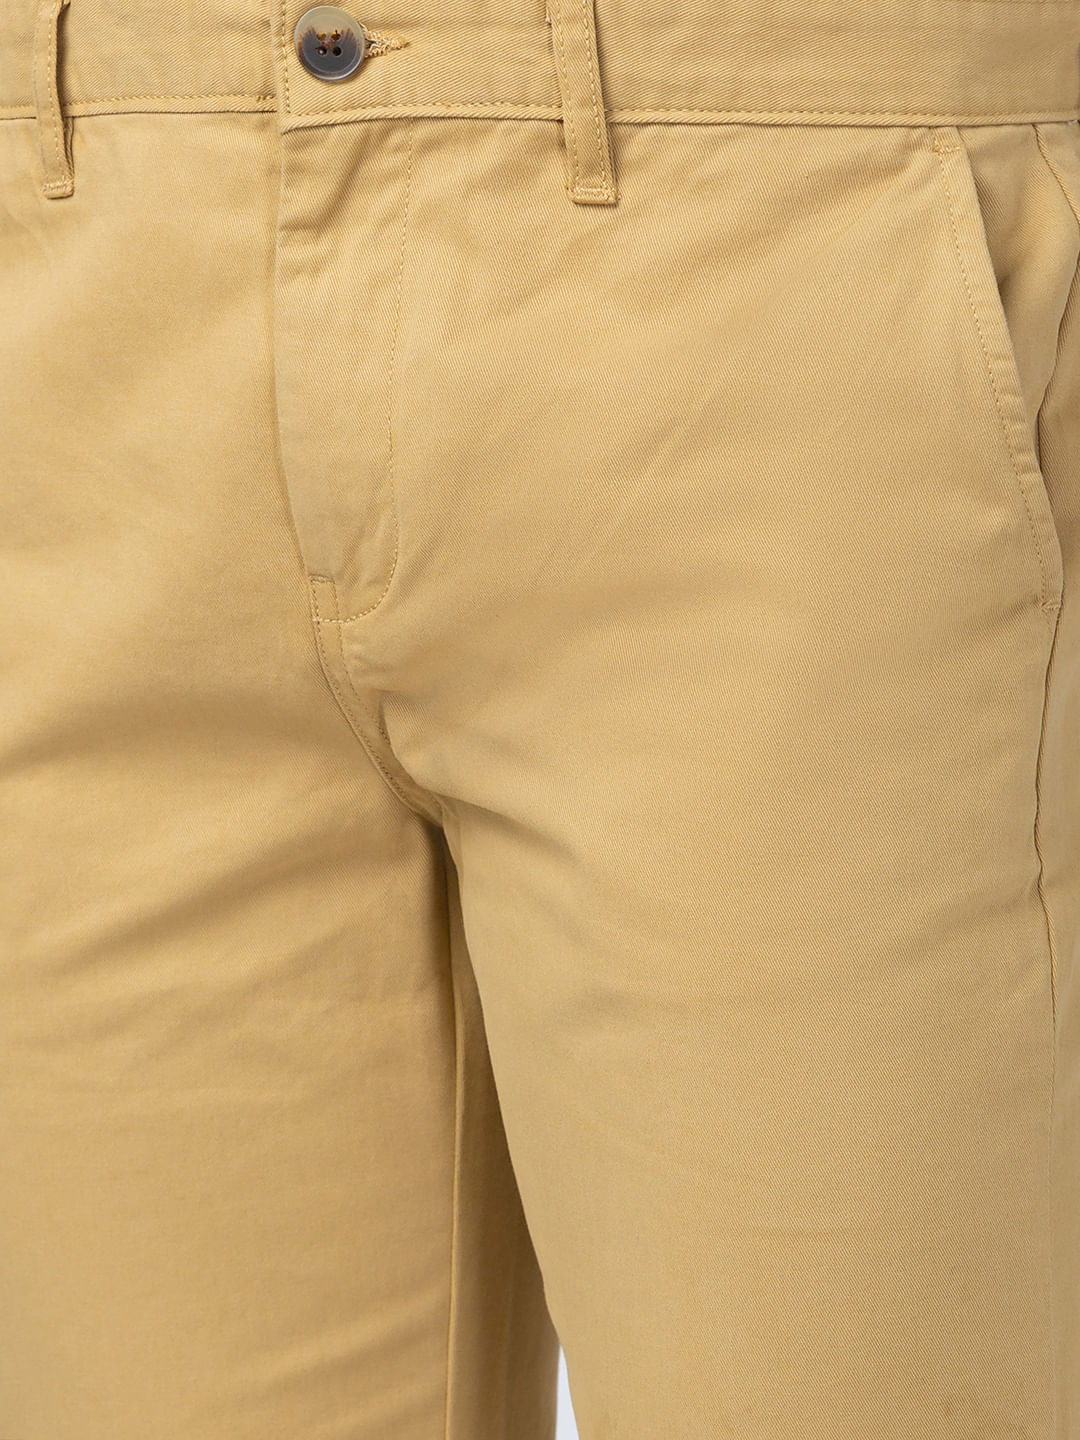 Perma Color Pima Twill Khaki Pants in True Khaki (Flat Front Models) b